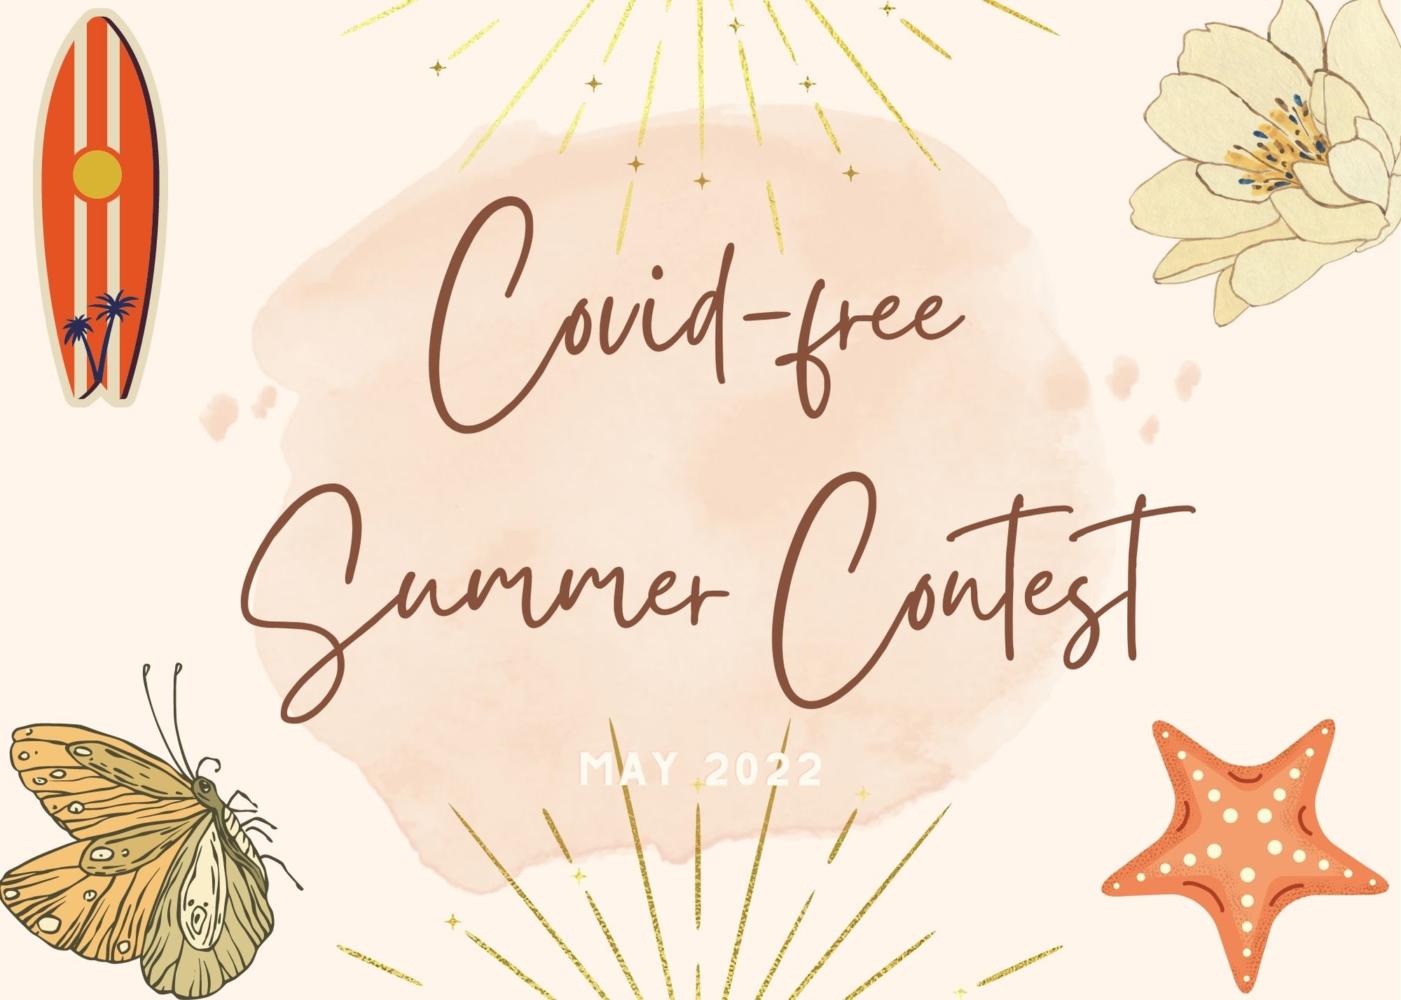 Covid-free+Summer+Contest+2022